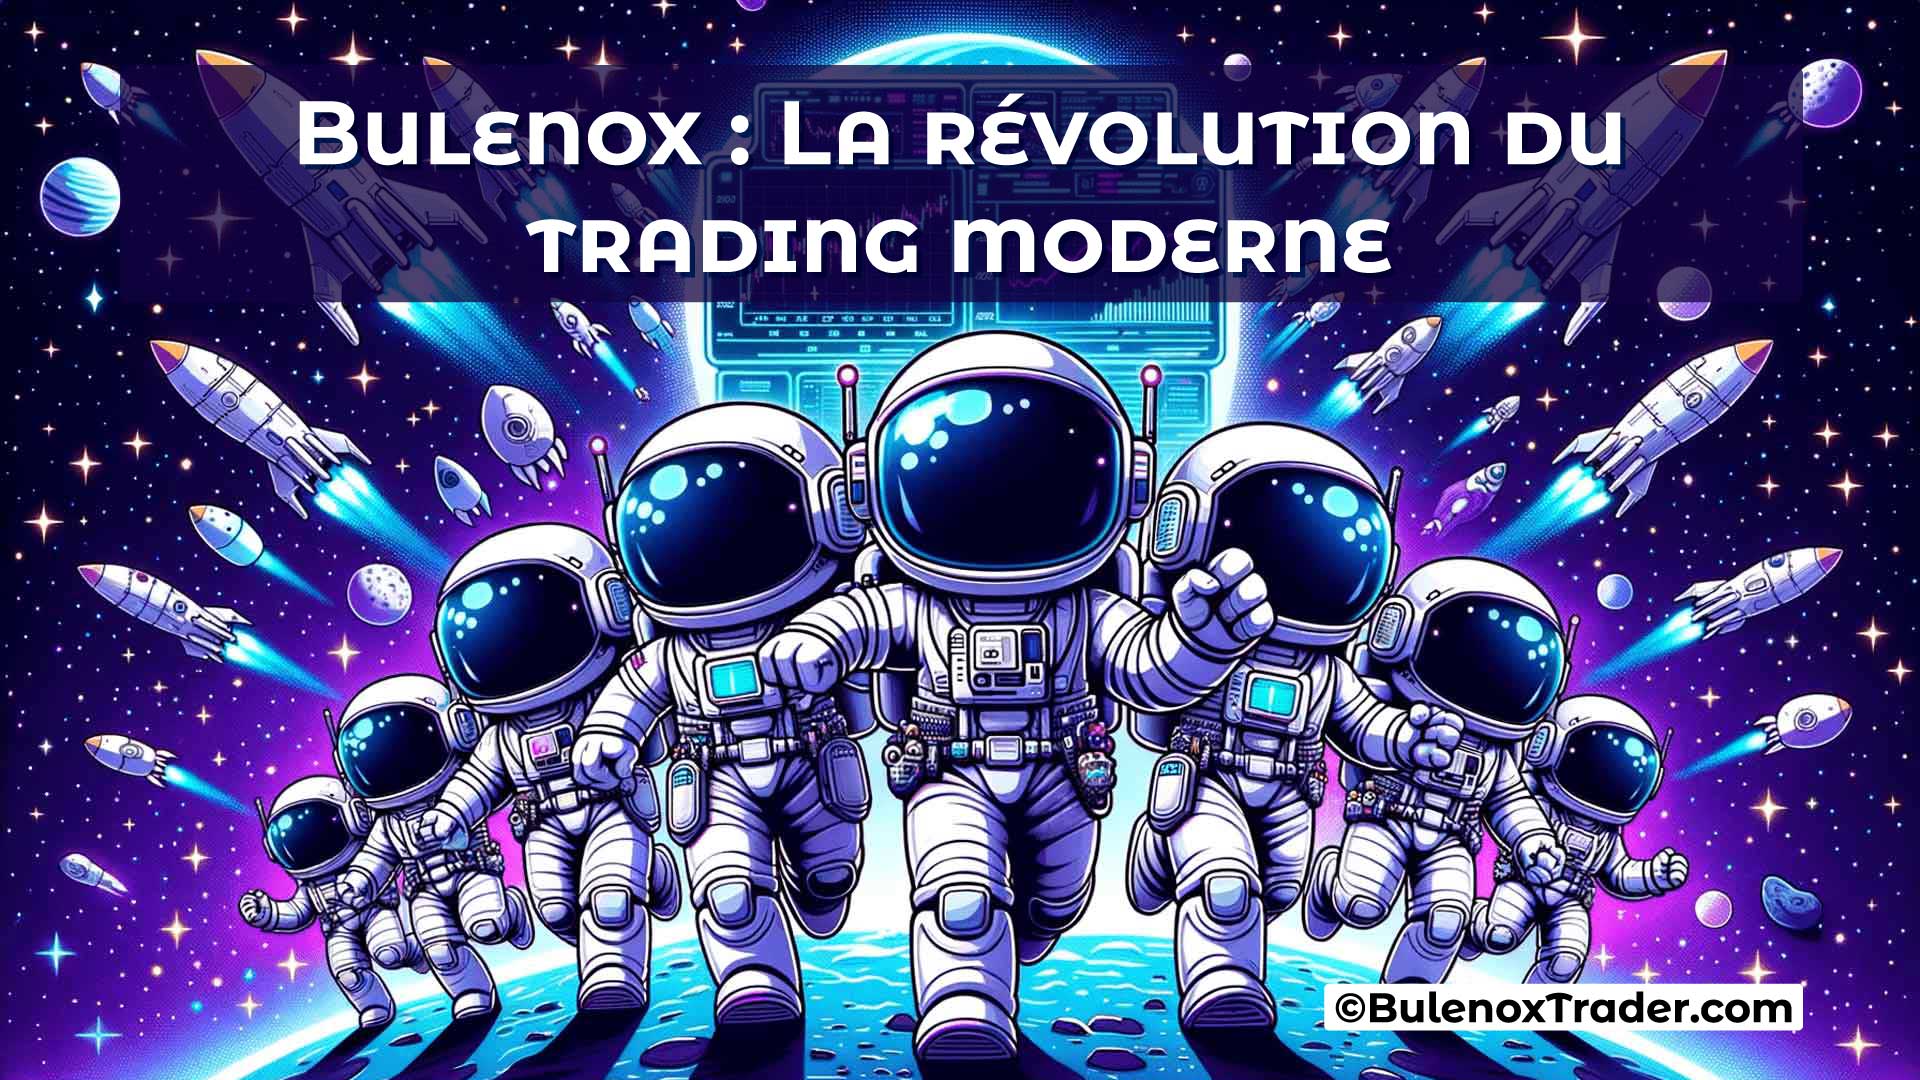 Bulenox-La-révolution-du-trading-moderne-on-Bulenox-Trader-Website